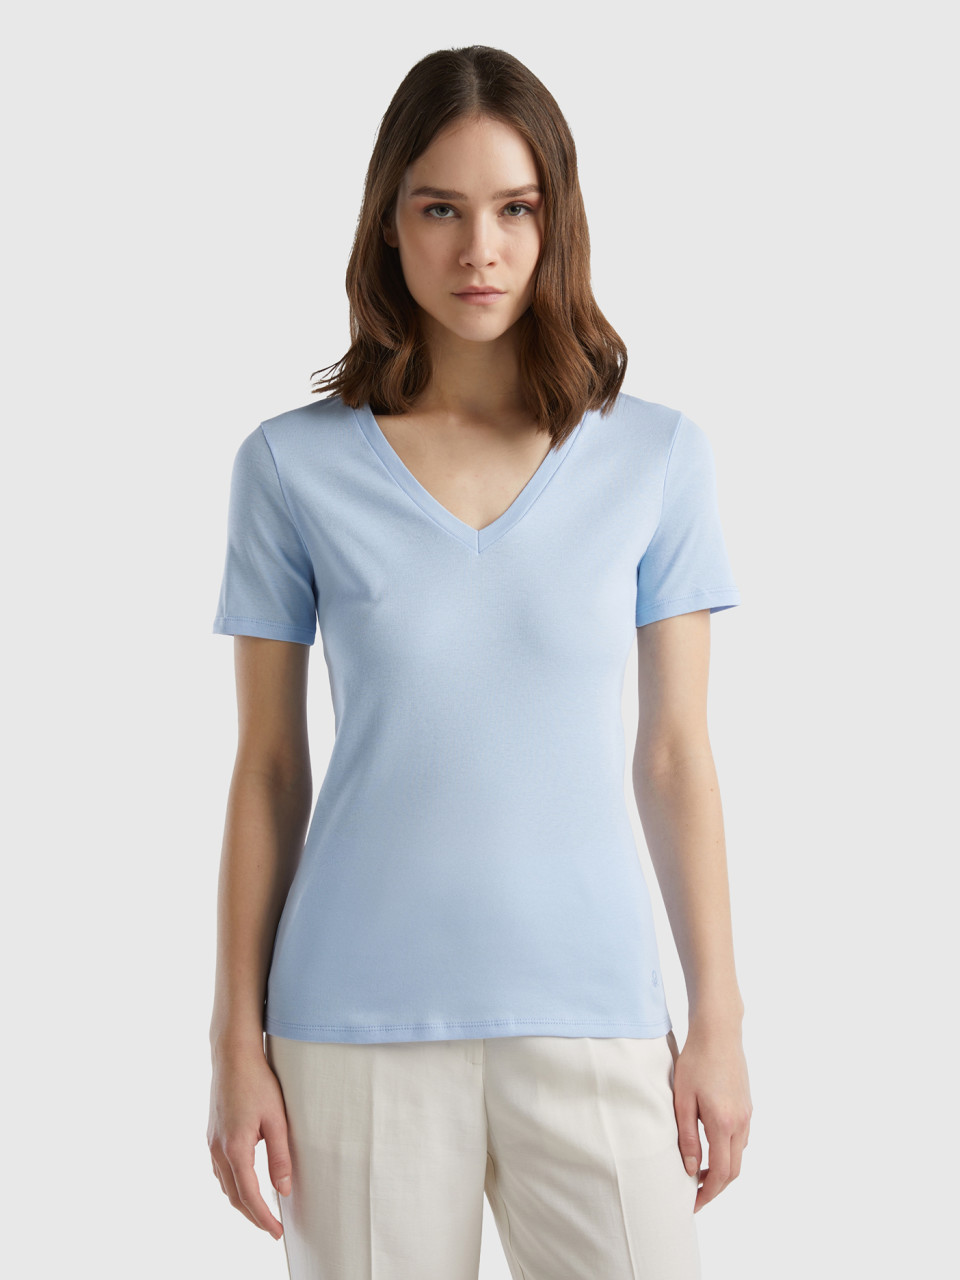 Benetton, Pure Cotton T-shirt With V-neck, Sky Blue, Women